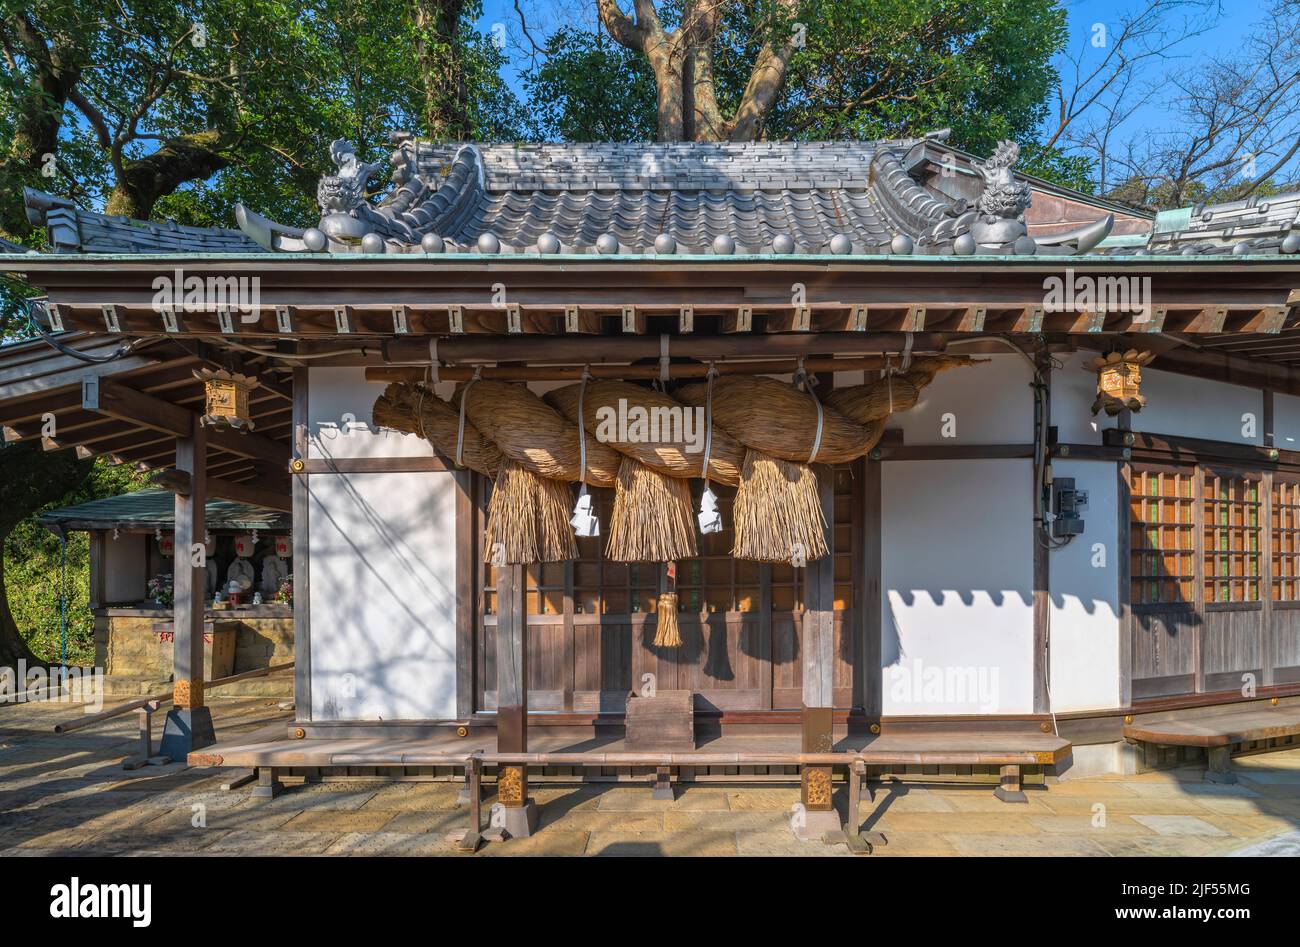 nagasaki, kyushu - december 14 2021: Japanese Shintoist Kazagashira-Daigongen shrine in Kazagashira Park adorned with a giant Oo-Shimenawa rice straw Stock Photo